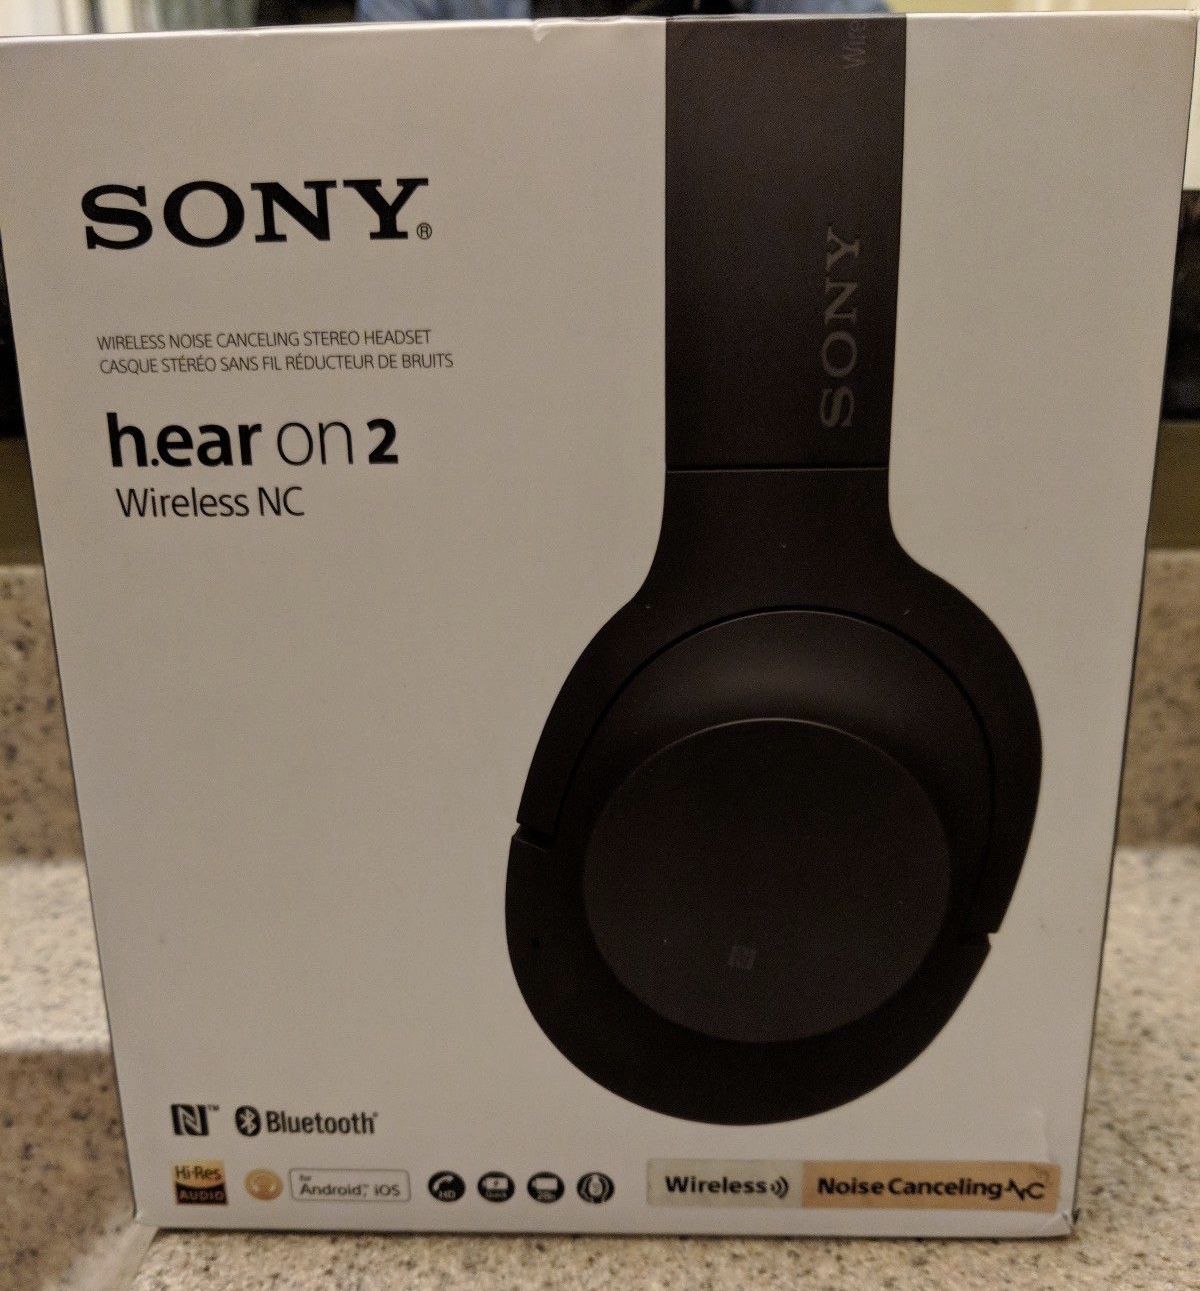 Sony WH-H900N h.ear on 2 Wireless Noise-Canceling Headphones.